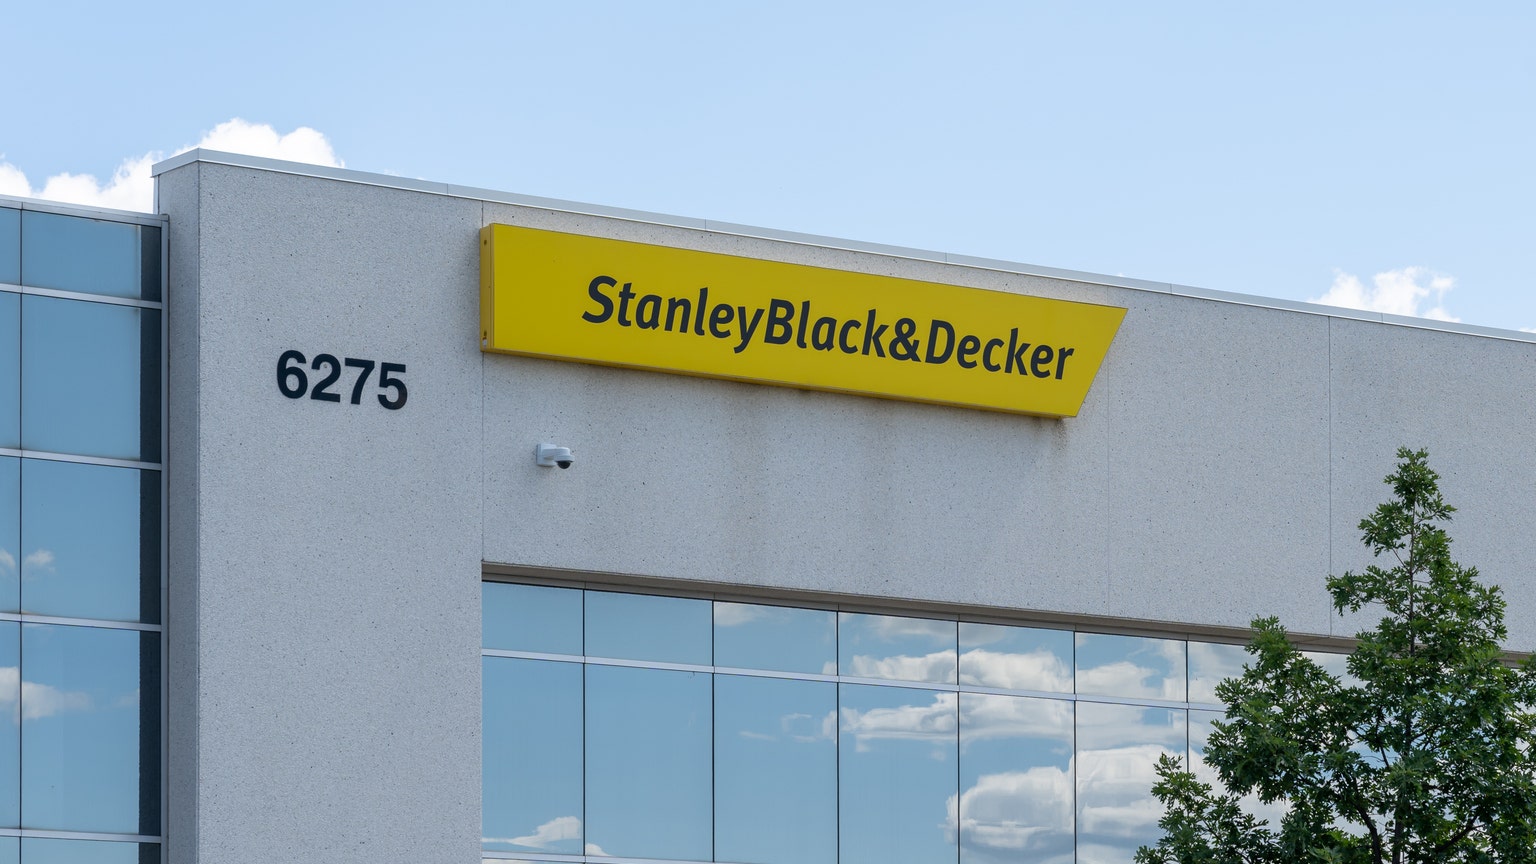 Stanley Black & Decker To Buy Outdoor Power Equipment Maker for $1.6 Billion